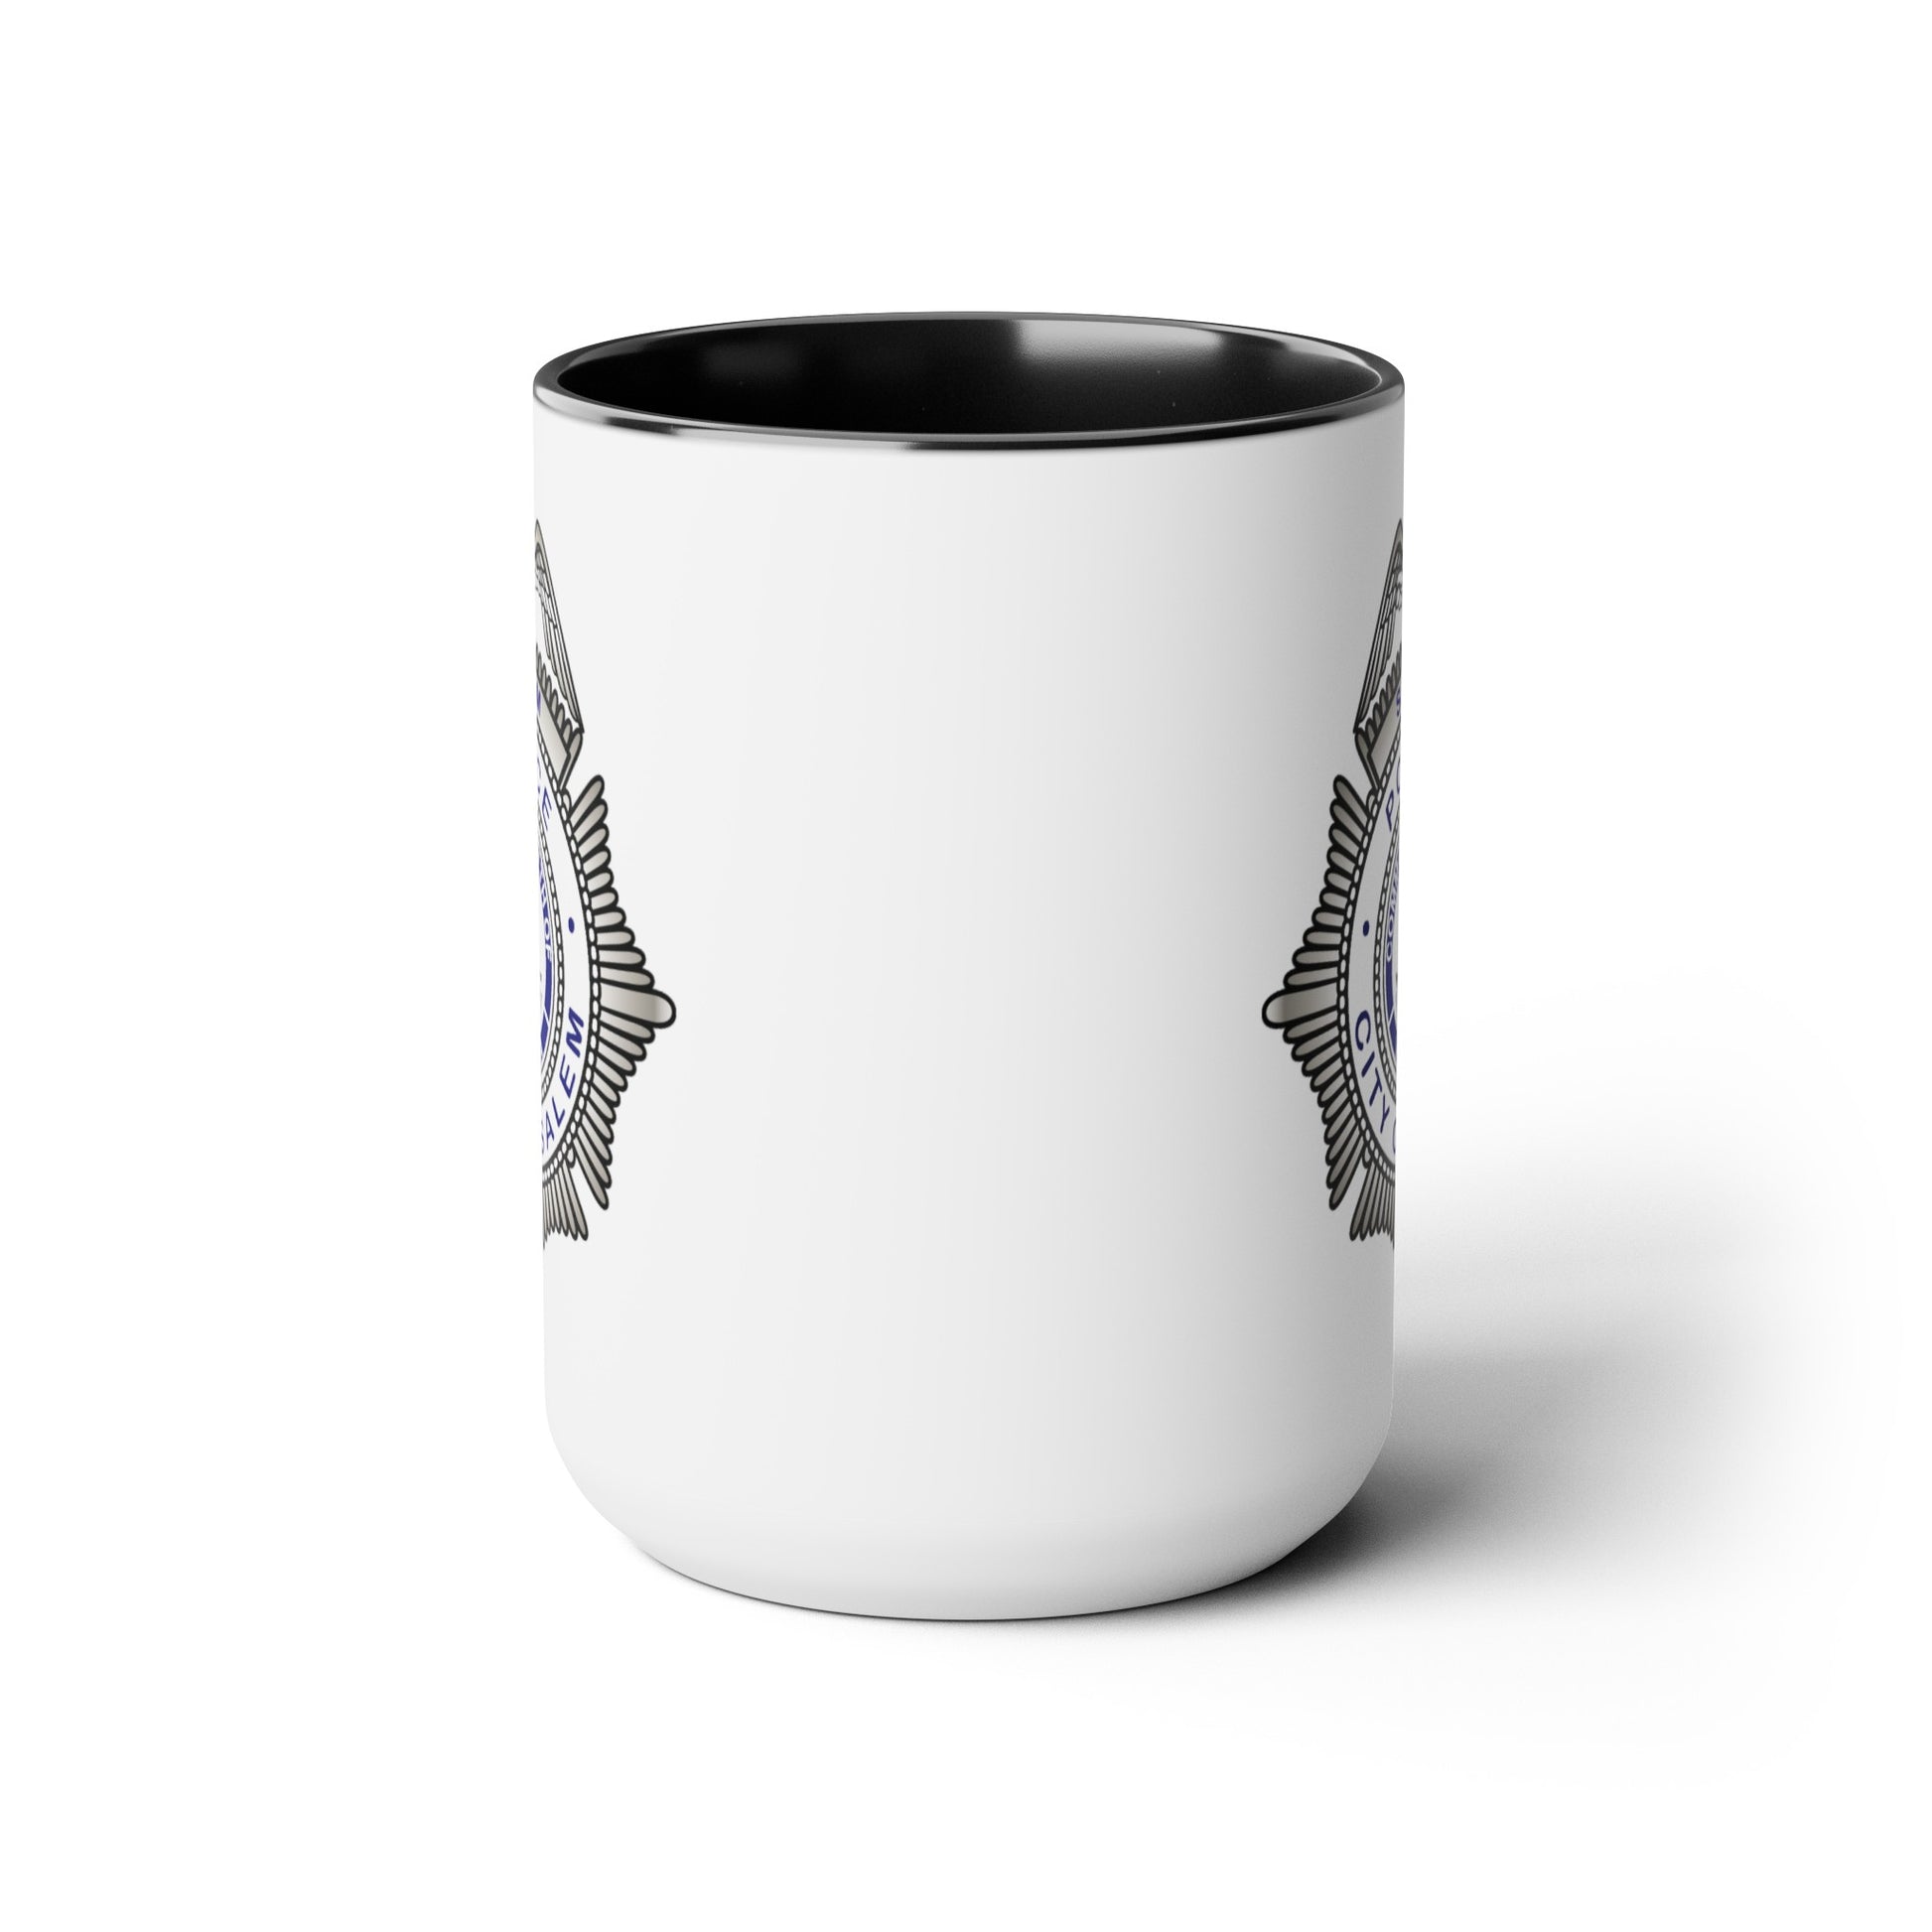 Salem Police Coffee Mug - Double Sided Black Accent White Ceramic 15oz by TheGlassyLass.com